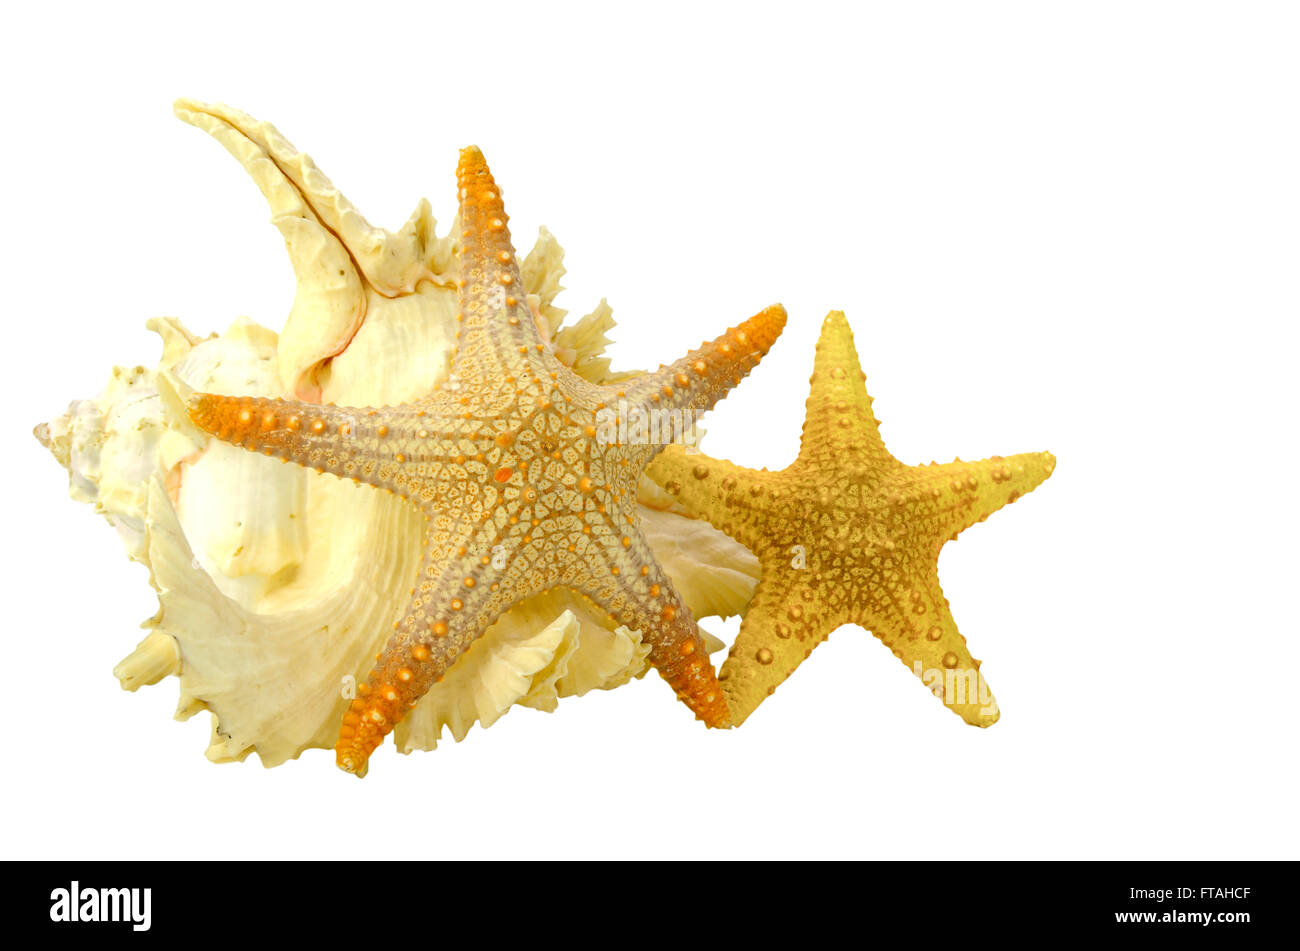 Seashell ane starfish aislado sobre fondo blanco con trazado de recorte. Foto de stock